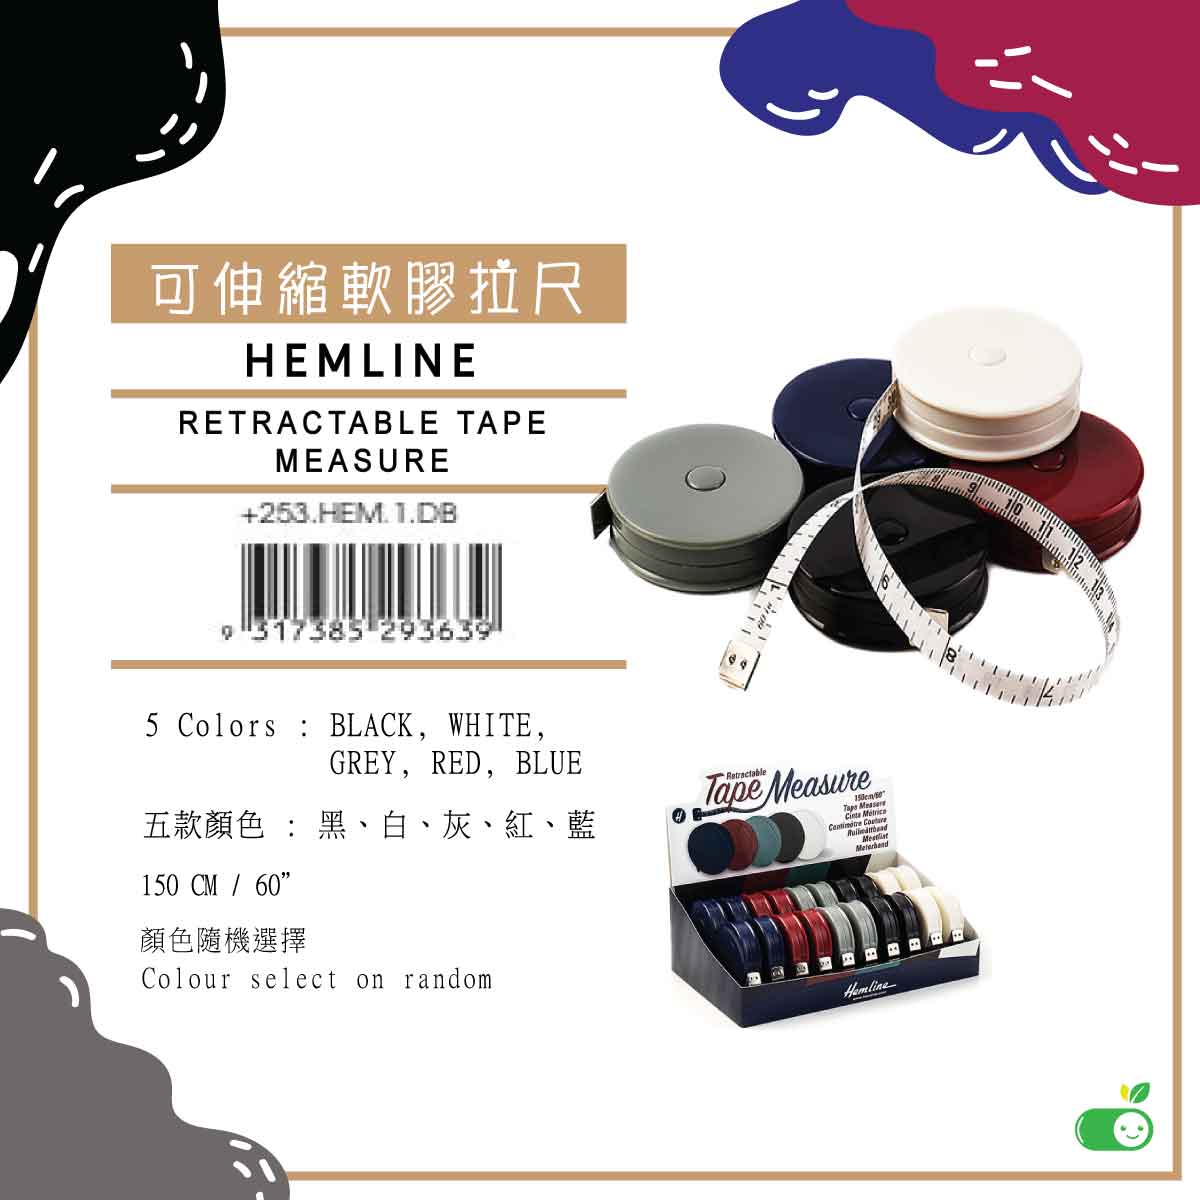 Hemline [高品質] 可伸縮捲尺150cm / 60“ (*顏色隨機發貨) - 健康份子 Health Mode